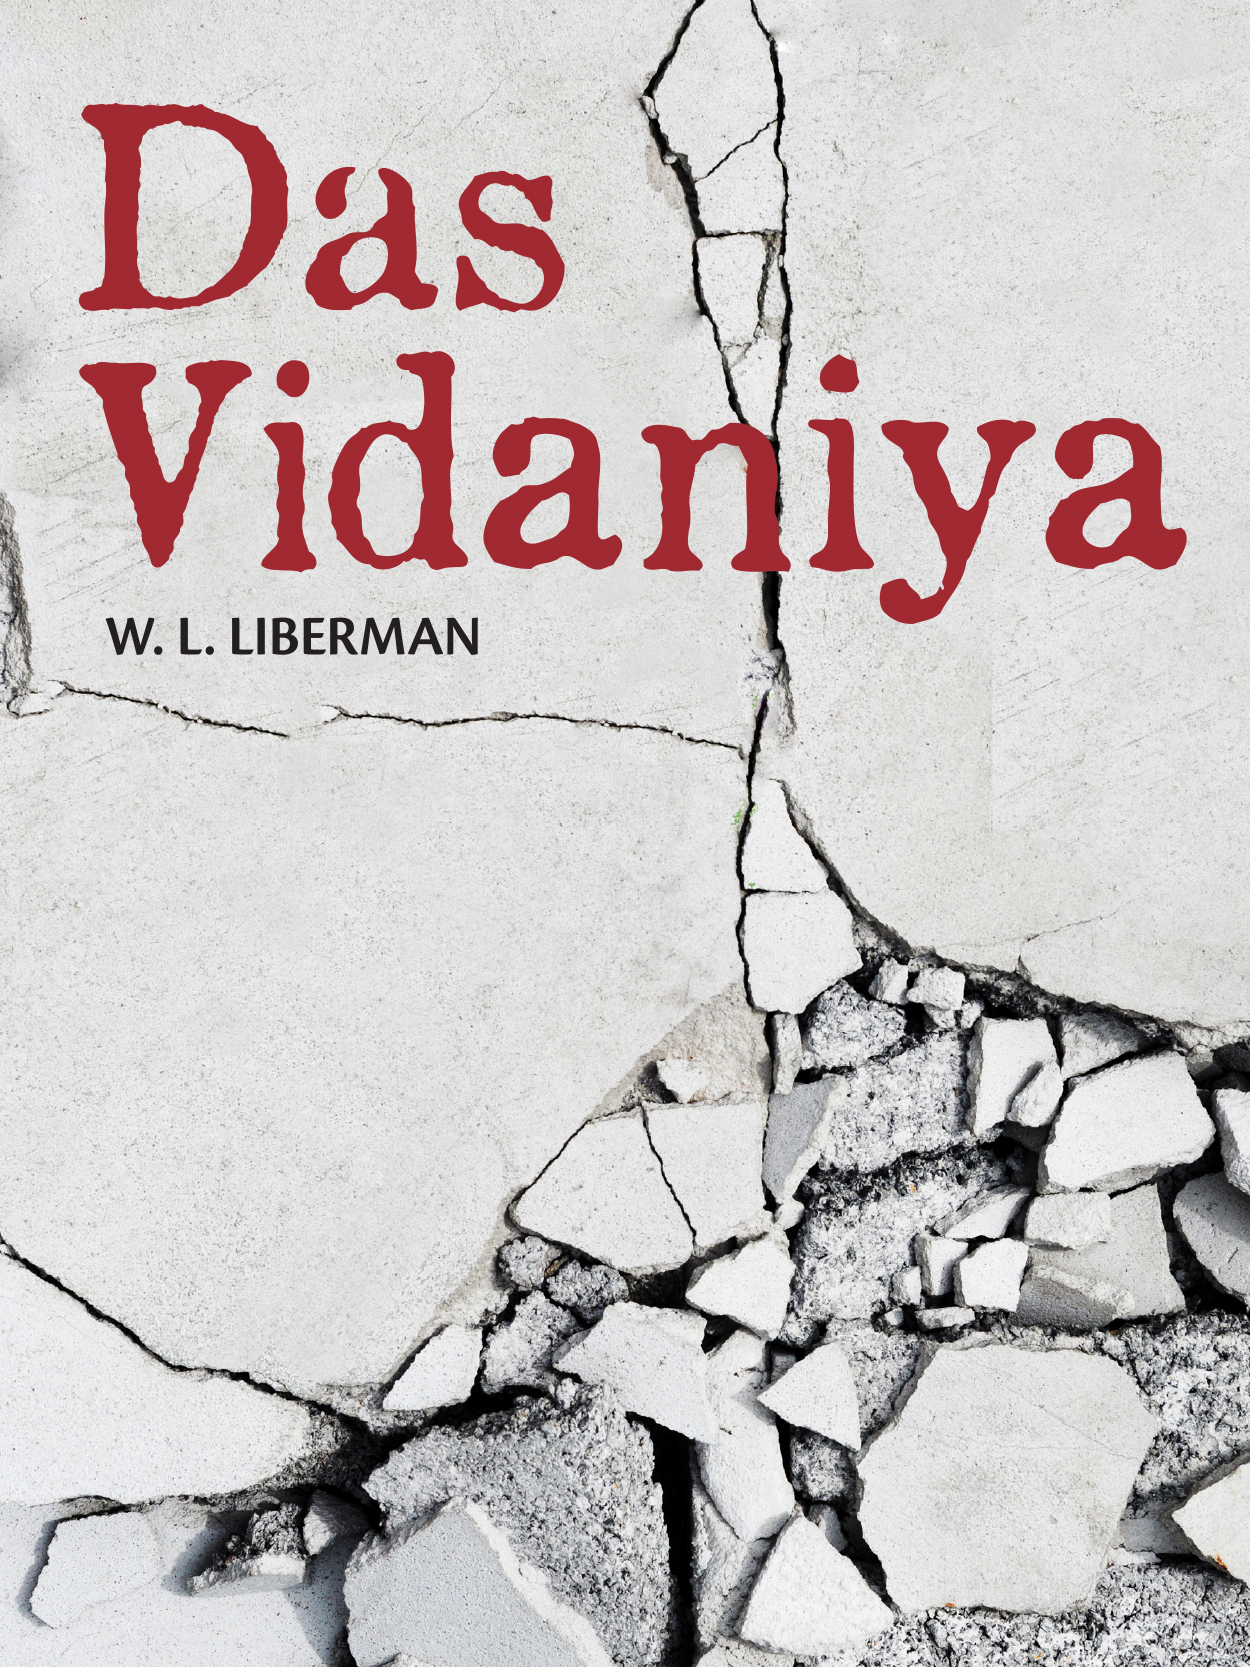 FREE: Dasvidaniya by W.L. Liberman